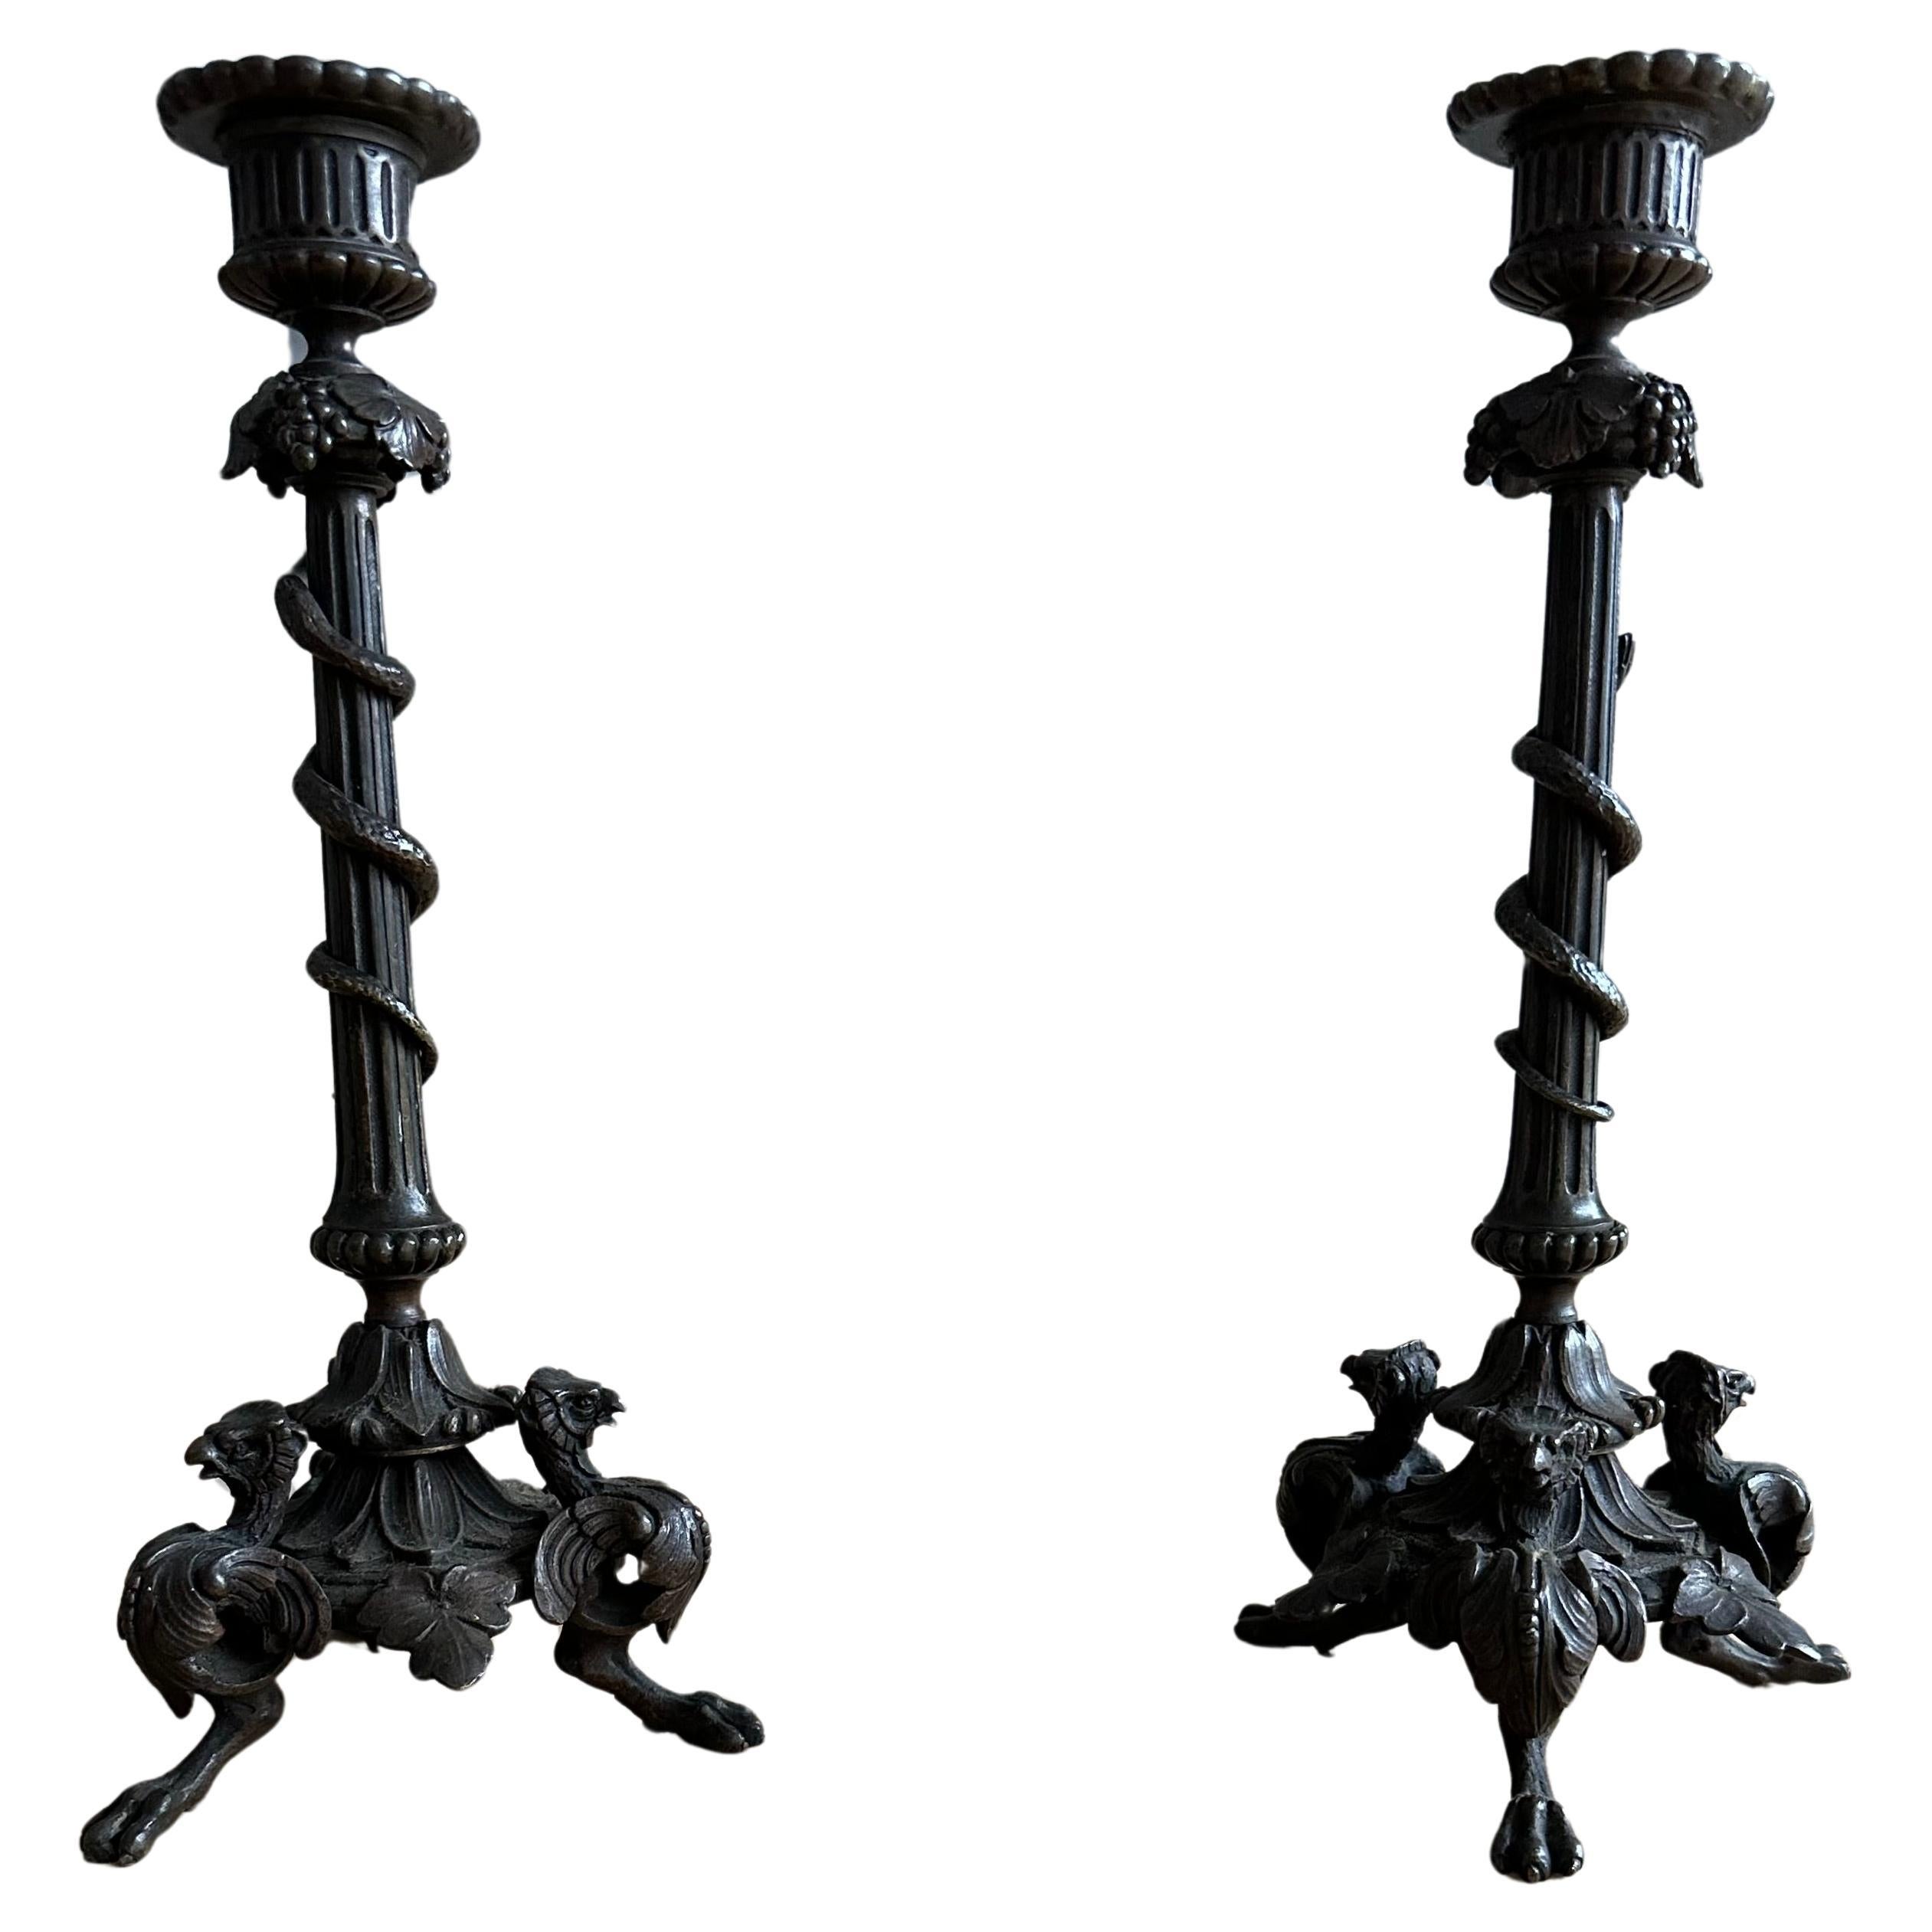 Großes Paar antiker Bronze-Kerzenständer aus dem 19. Jahrhundert mit Phoenix-Skulpturen